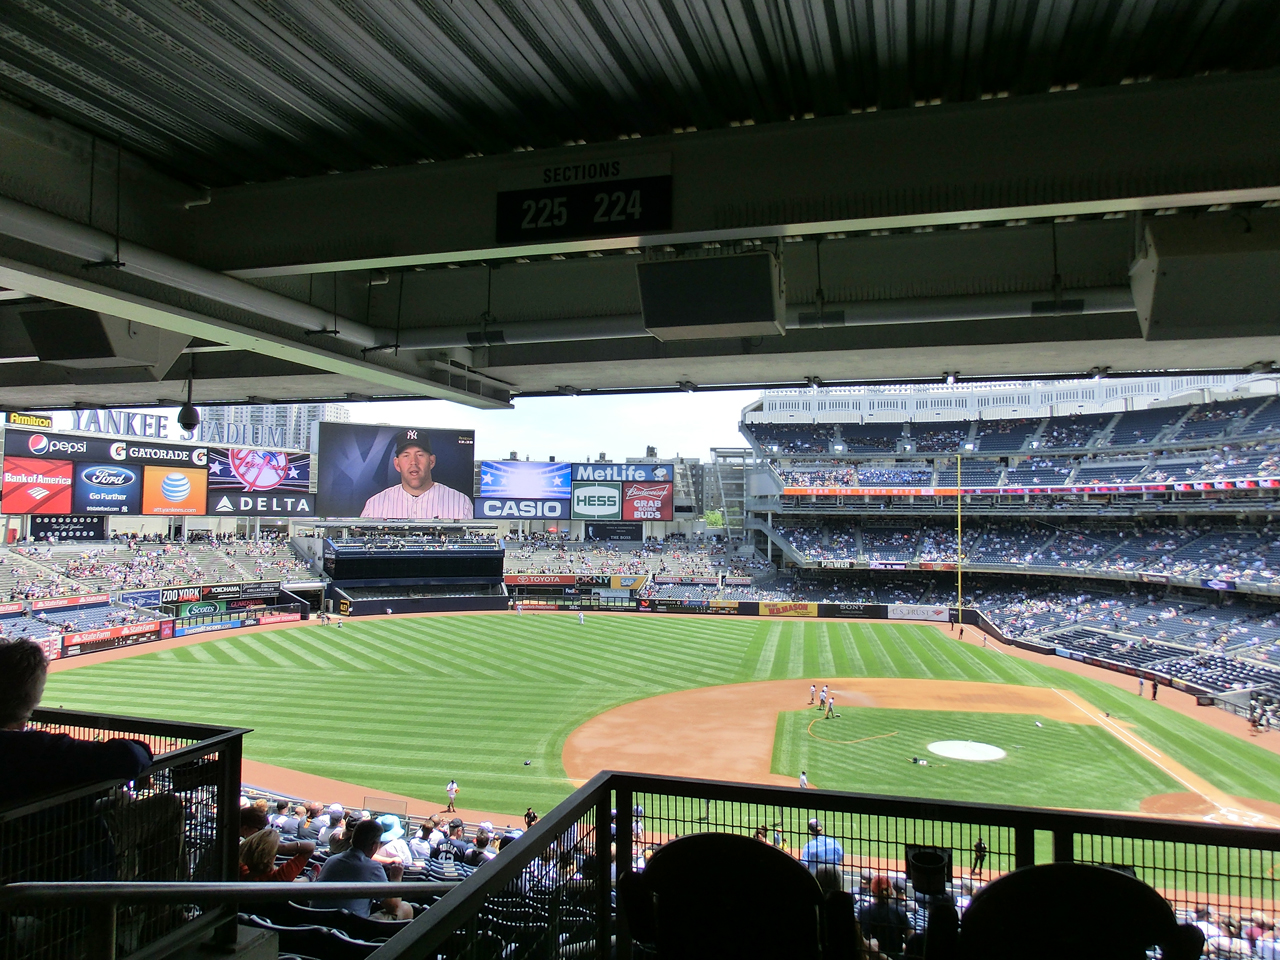 New York Yankees Stadium: Baseballfeld vom Main Level (2. Ebene) betrachtet